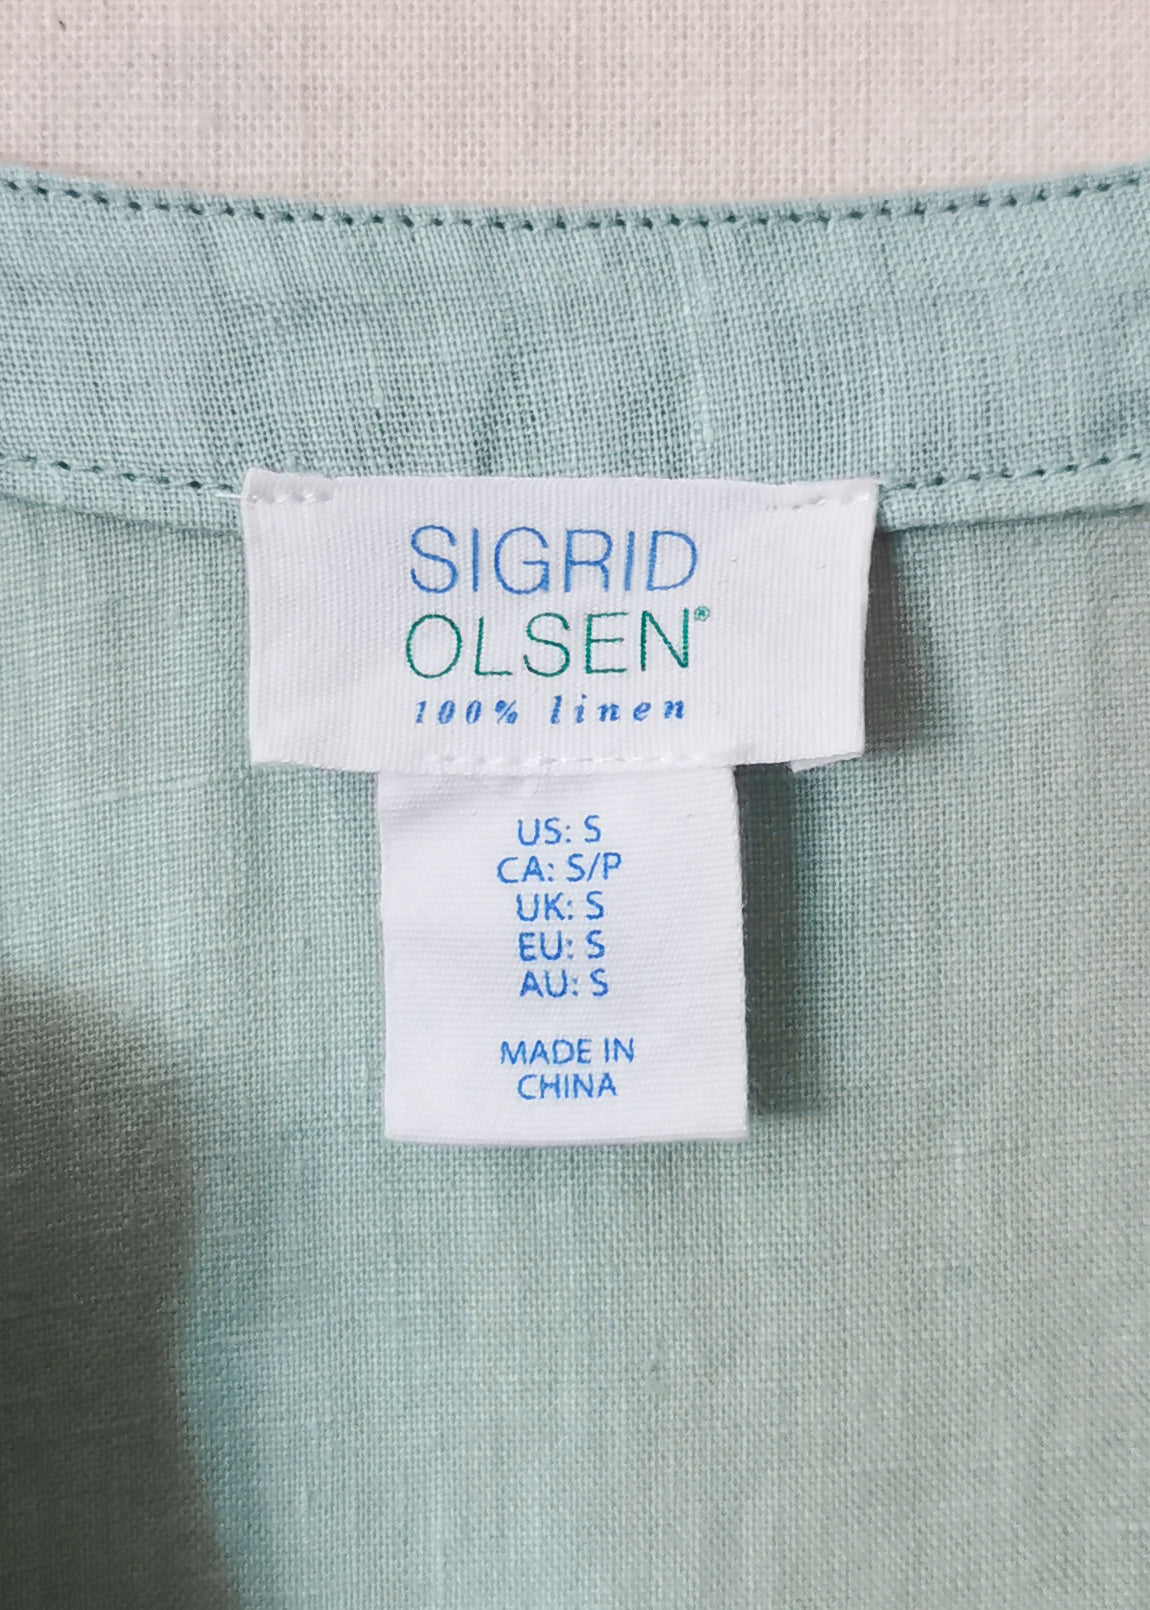 Sigrid Olsen Linen Top (S)